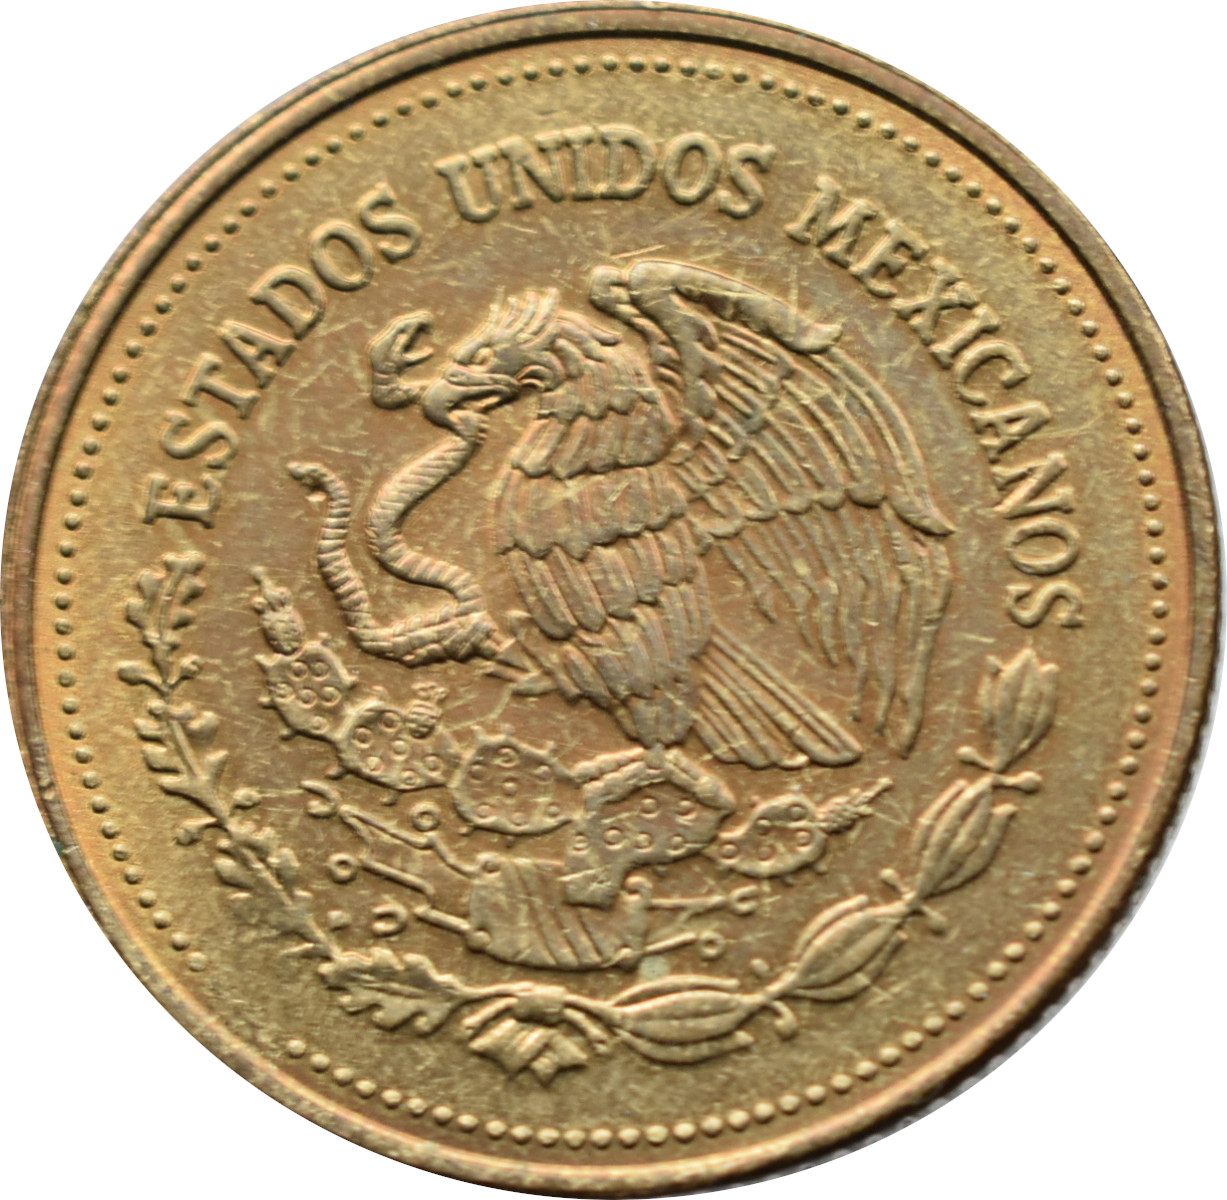 Mexiko 1000 Pesos 1988